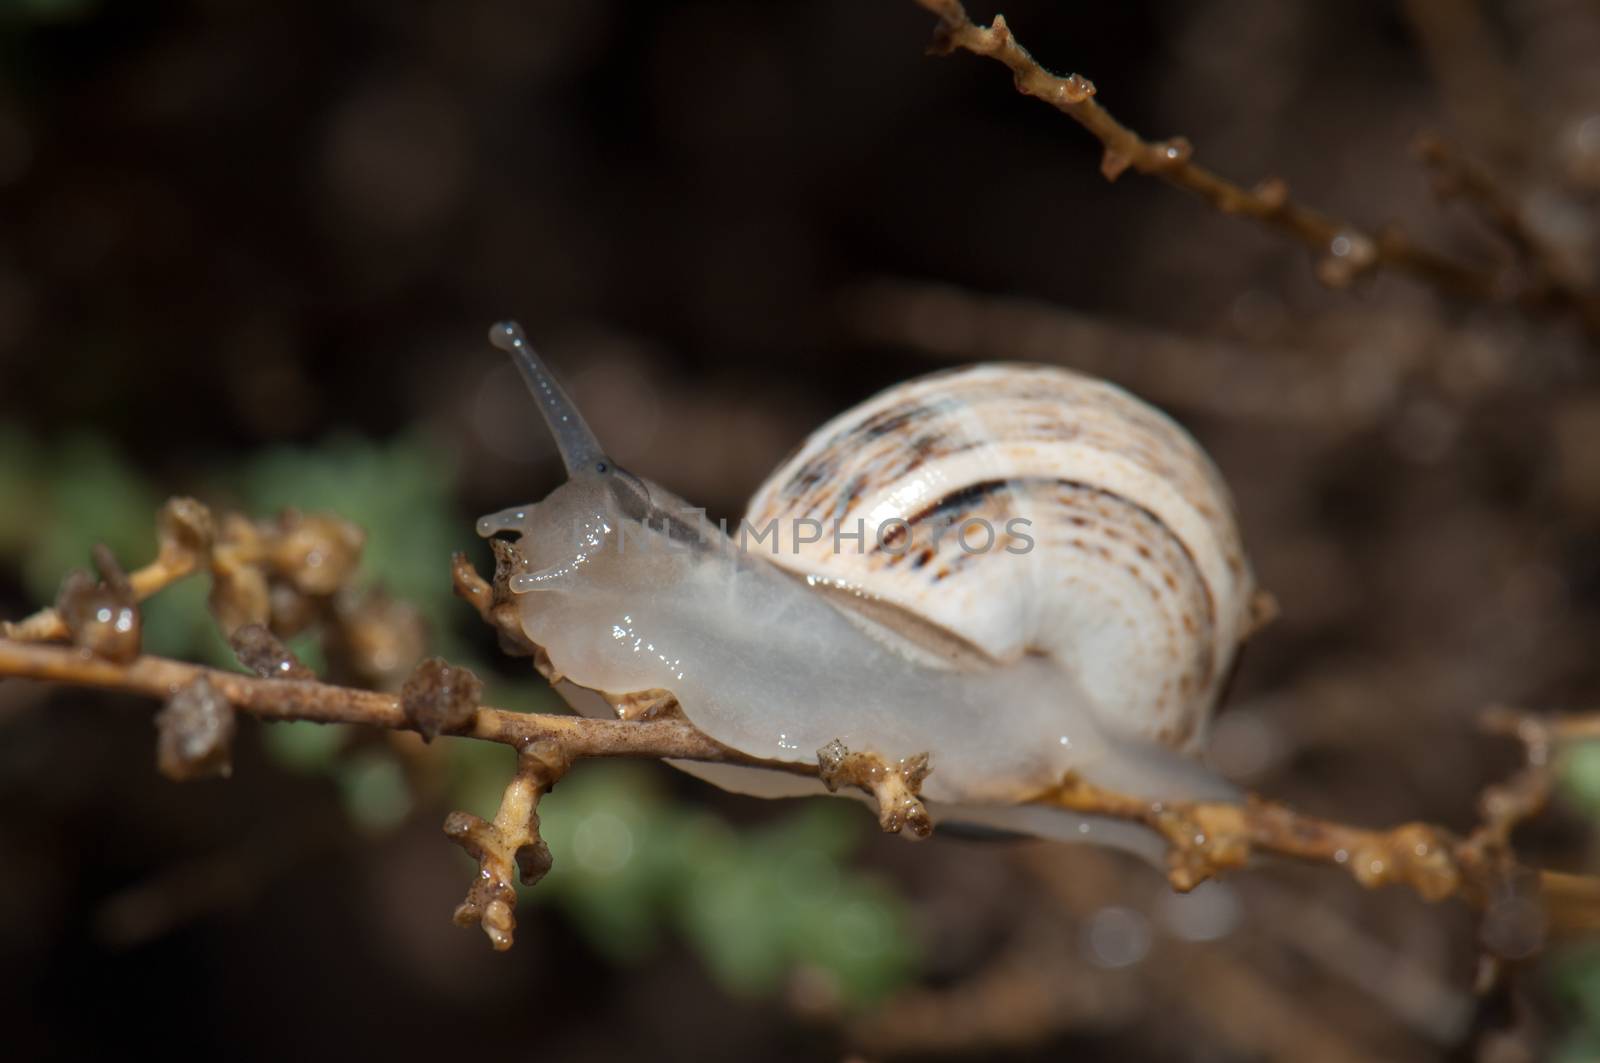 White garden snail (Theba pisana). Tindaya. La Oliva. Fuerteventura. Canary Islands. Spain.